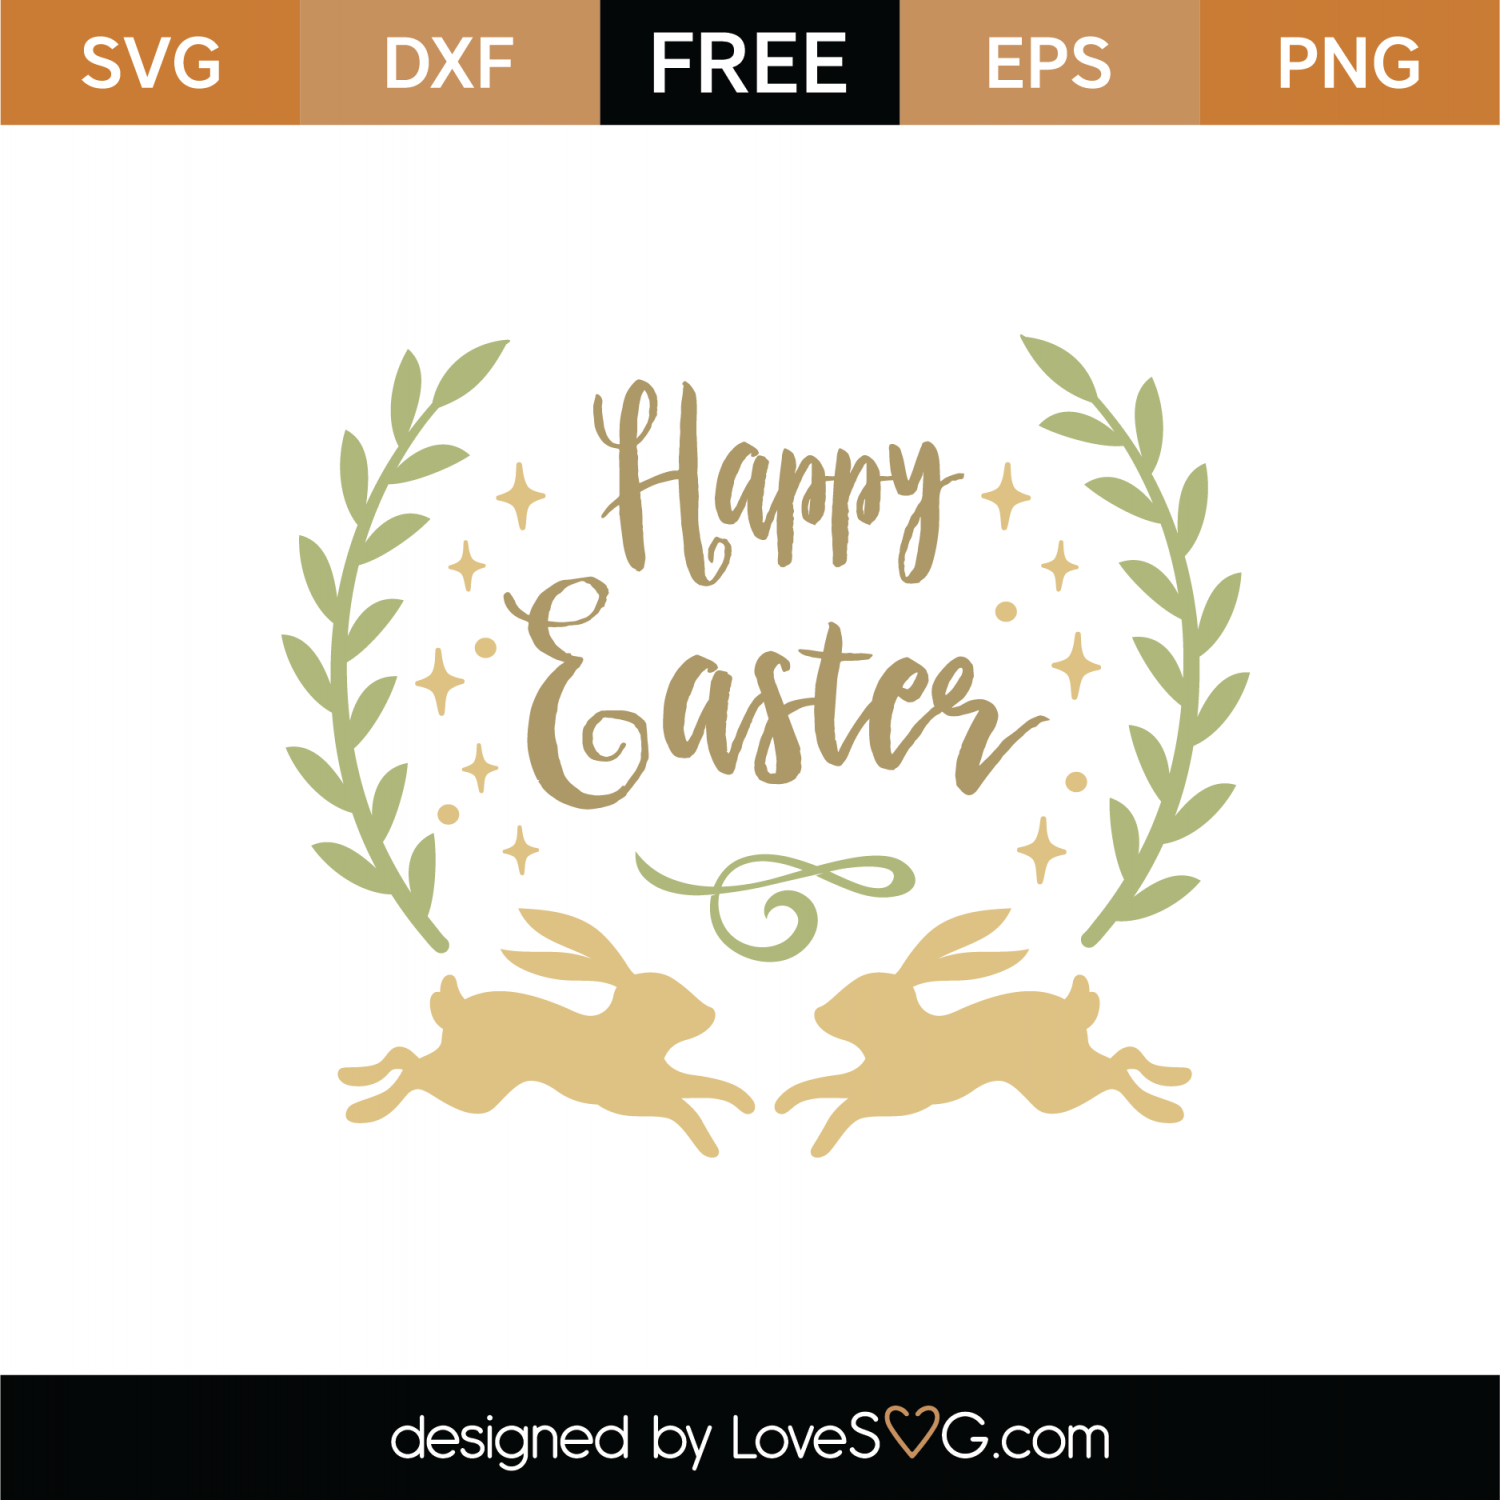 Free Happy Easter Bunnies SVG Cut File | Lovesvg.com